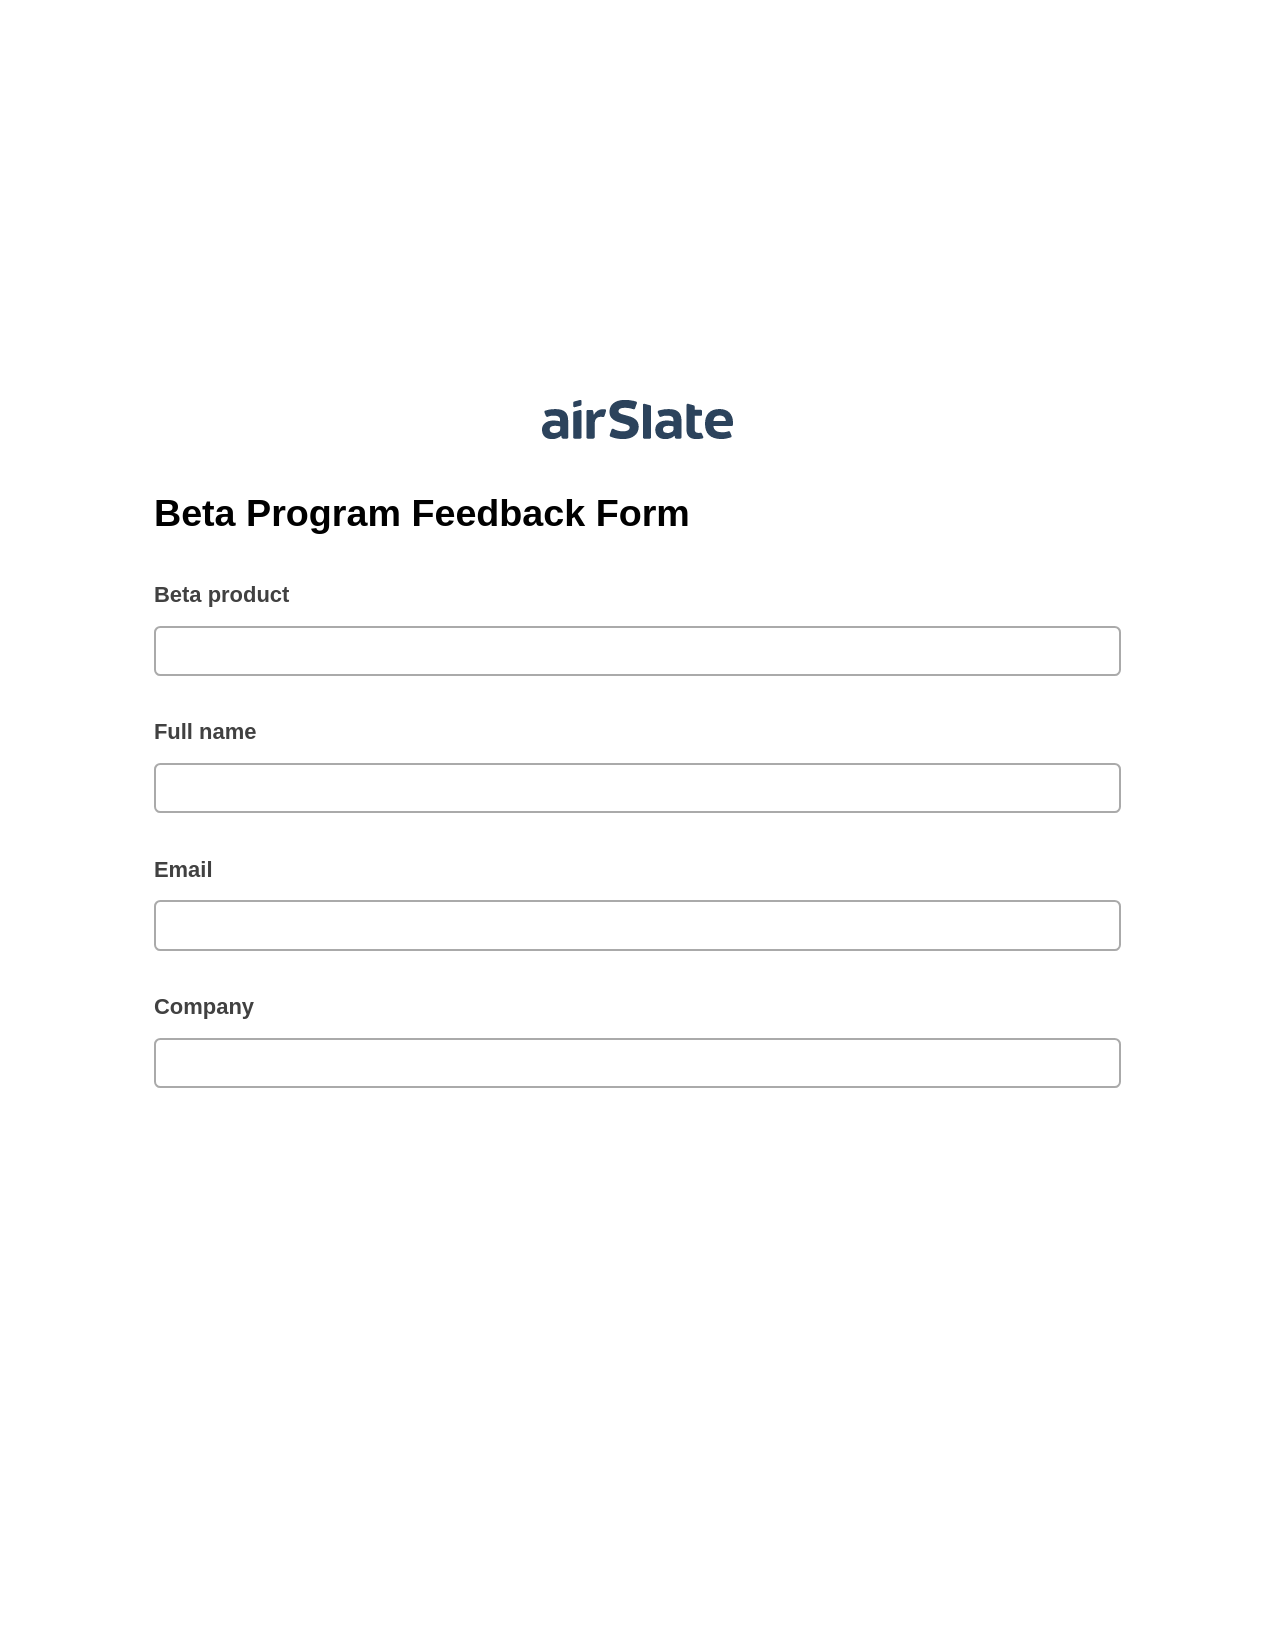 Beta Program Feedback Form Pre-fill from NetSuite Records Bot, Slack Notification Bot, Slack Notification Postfinish Bot